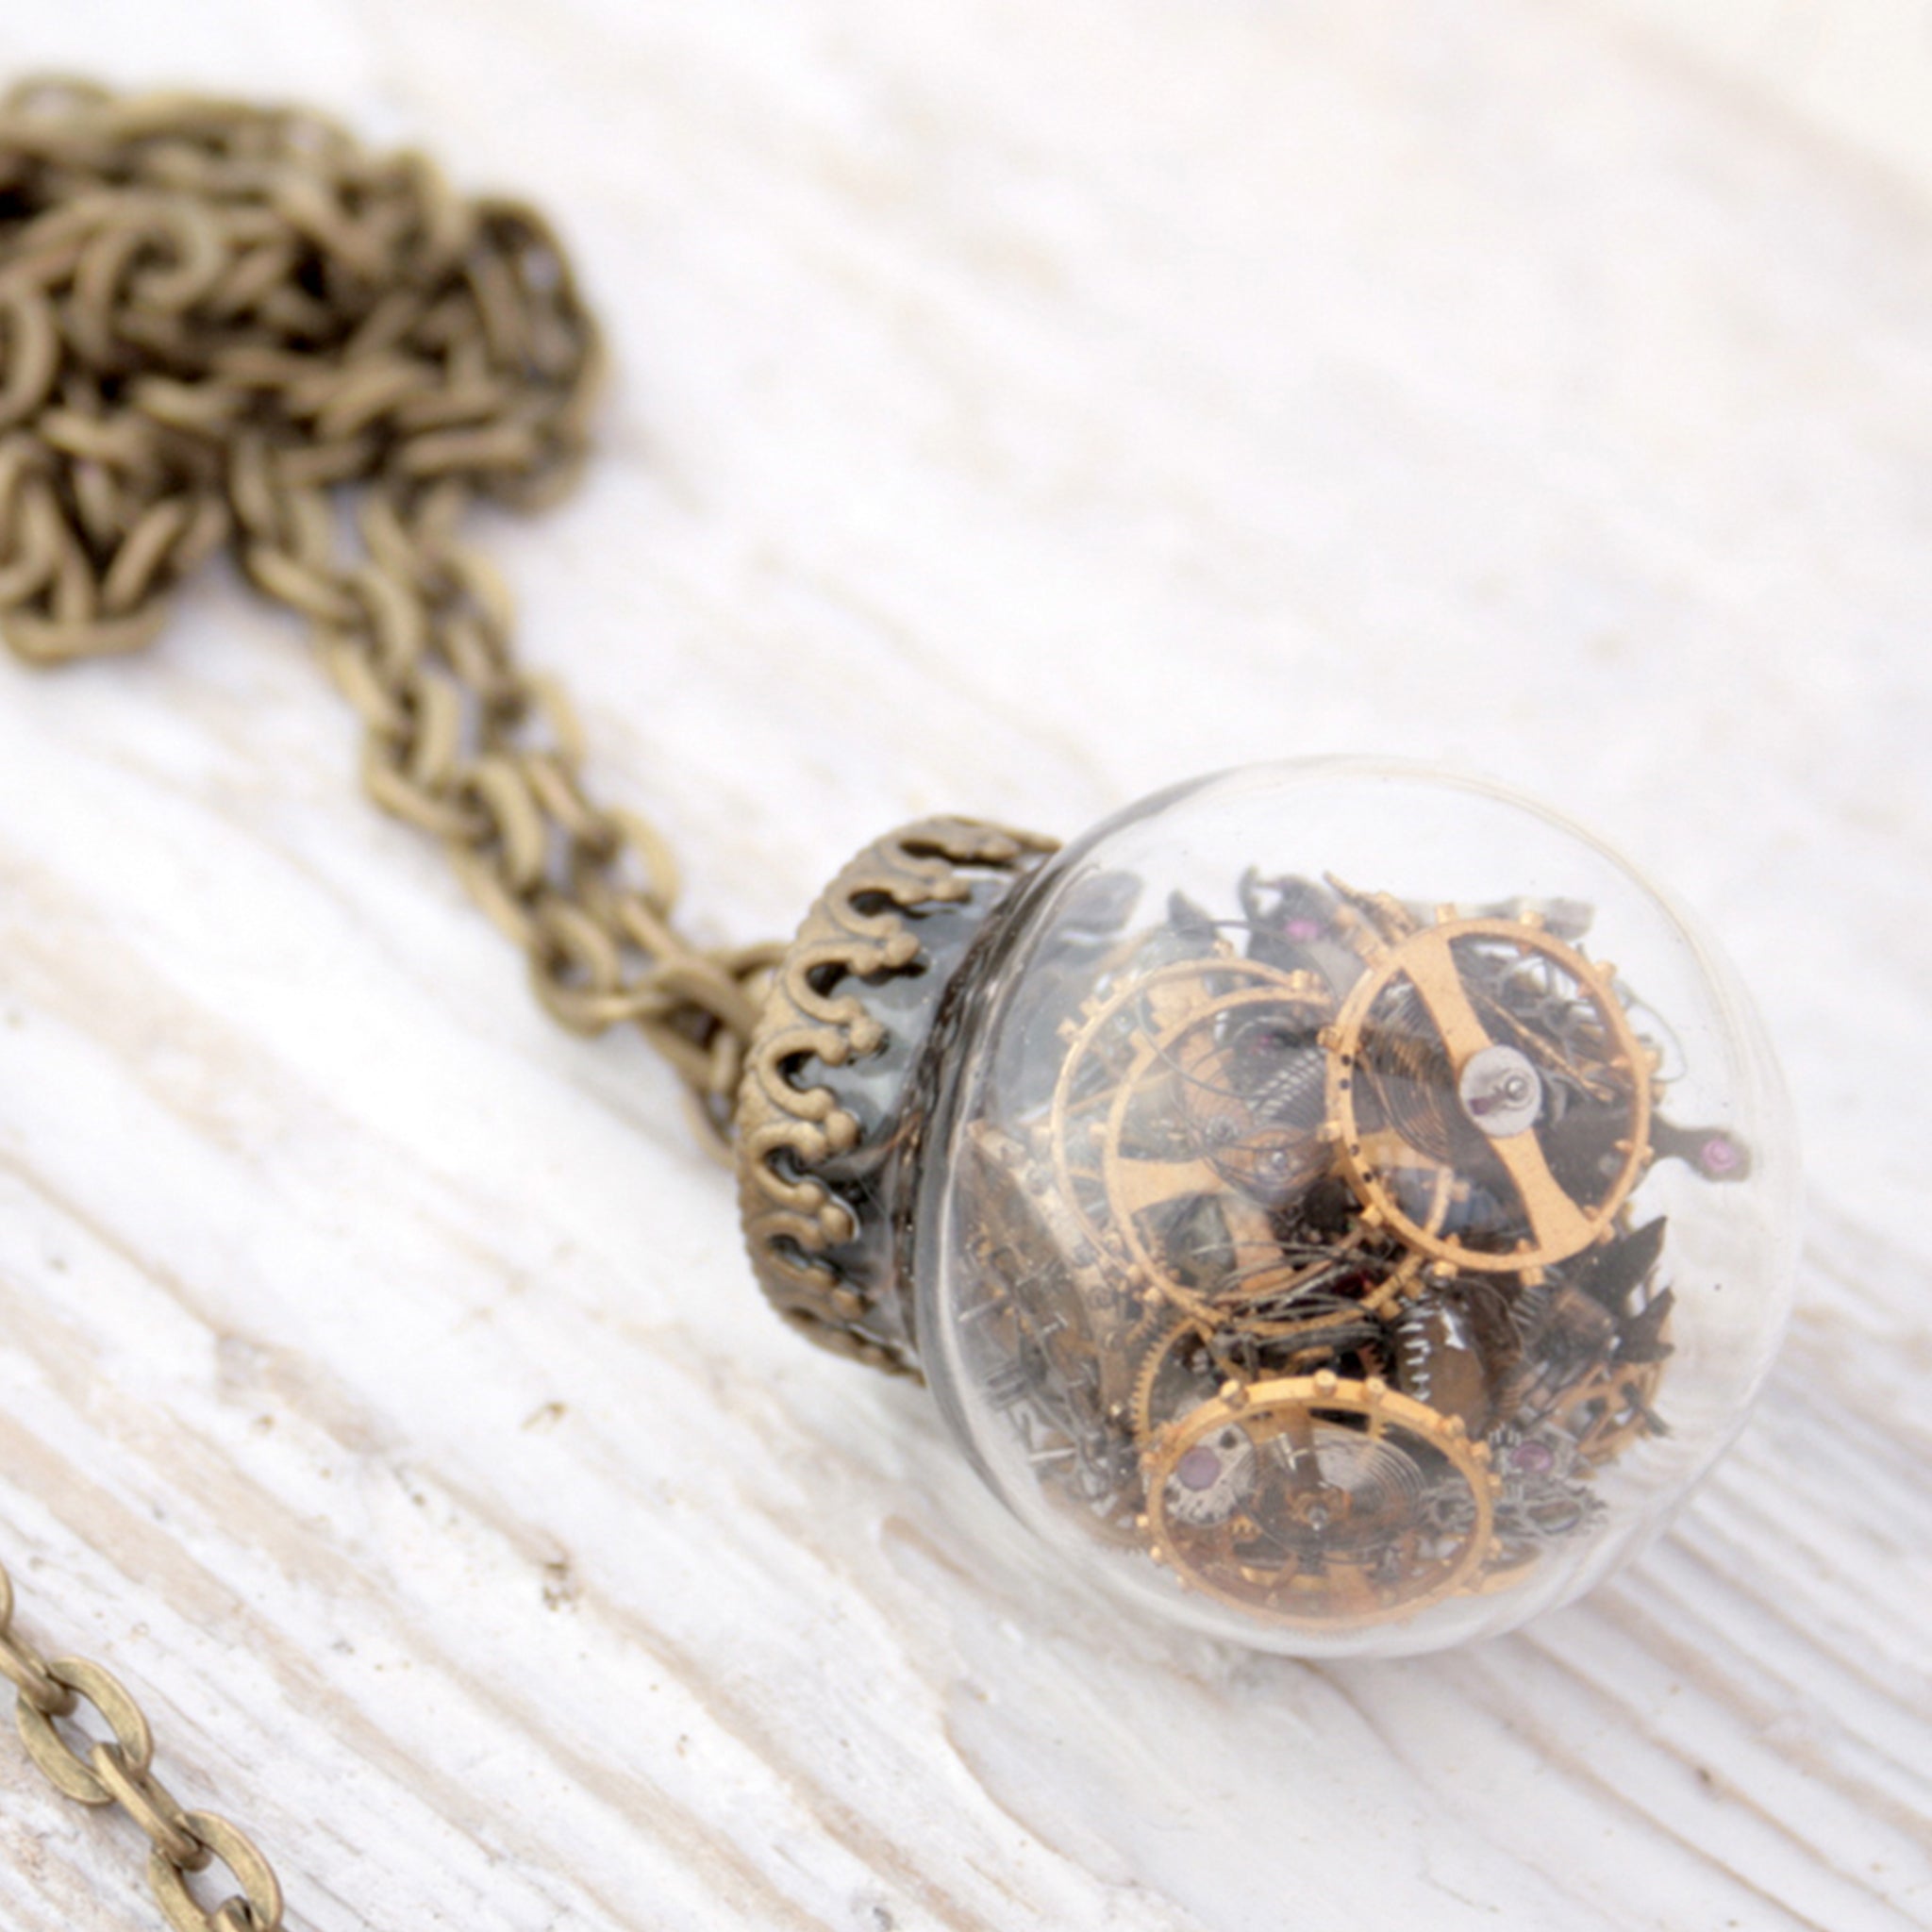 Glass Terrarium Necklace with Steampunk Watch Parts